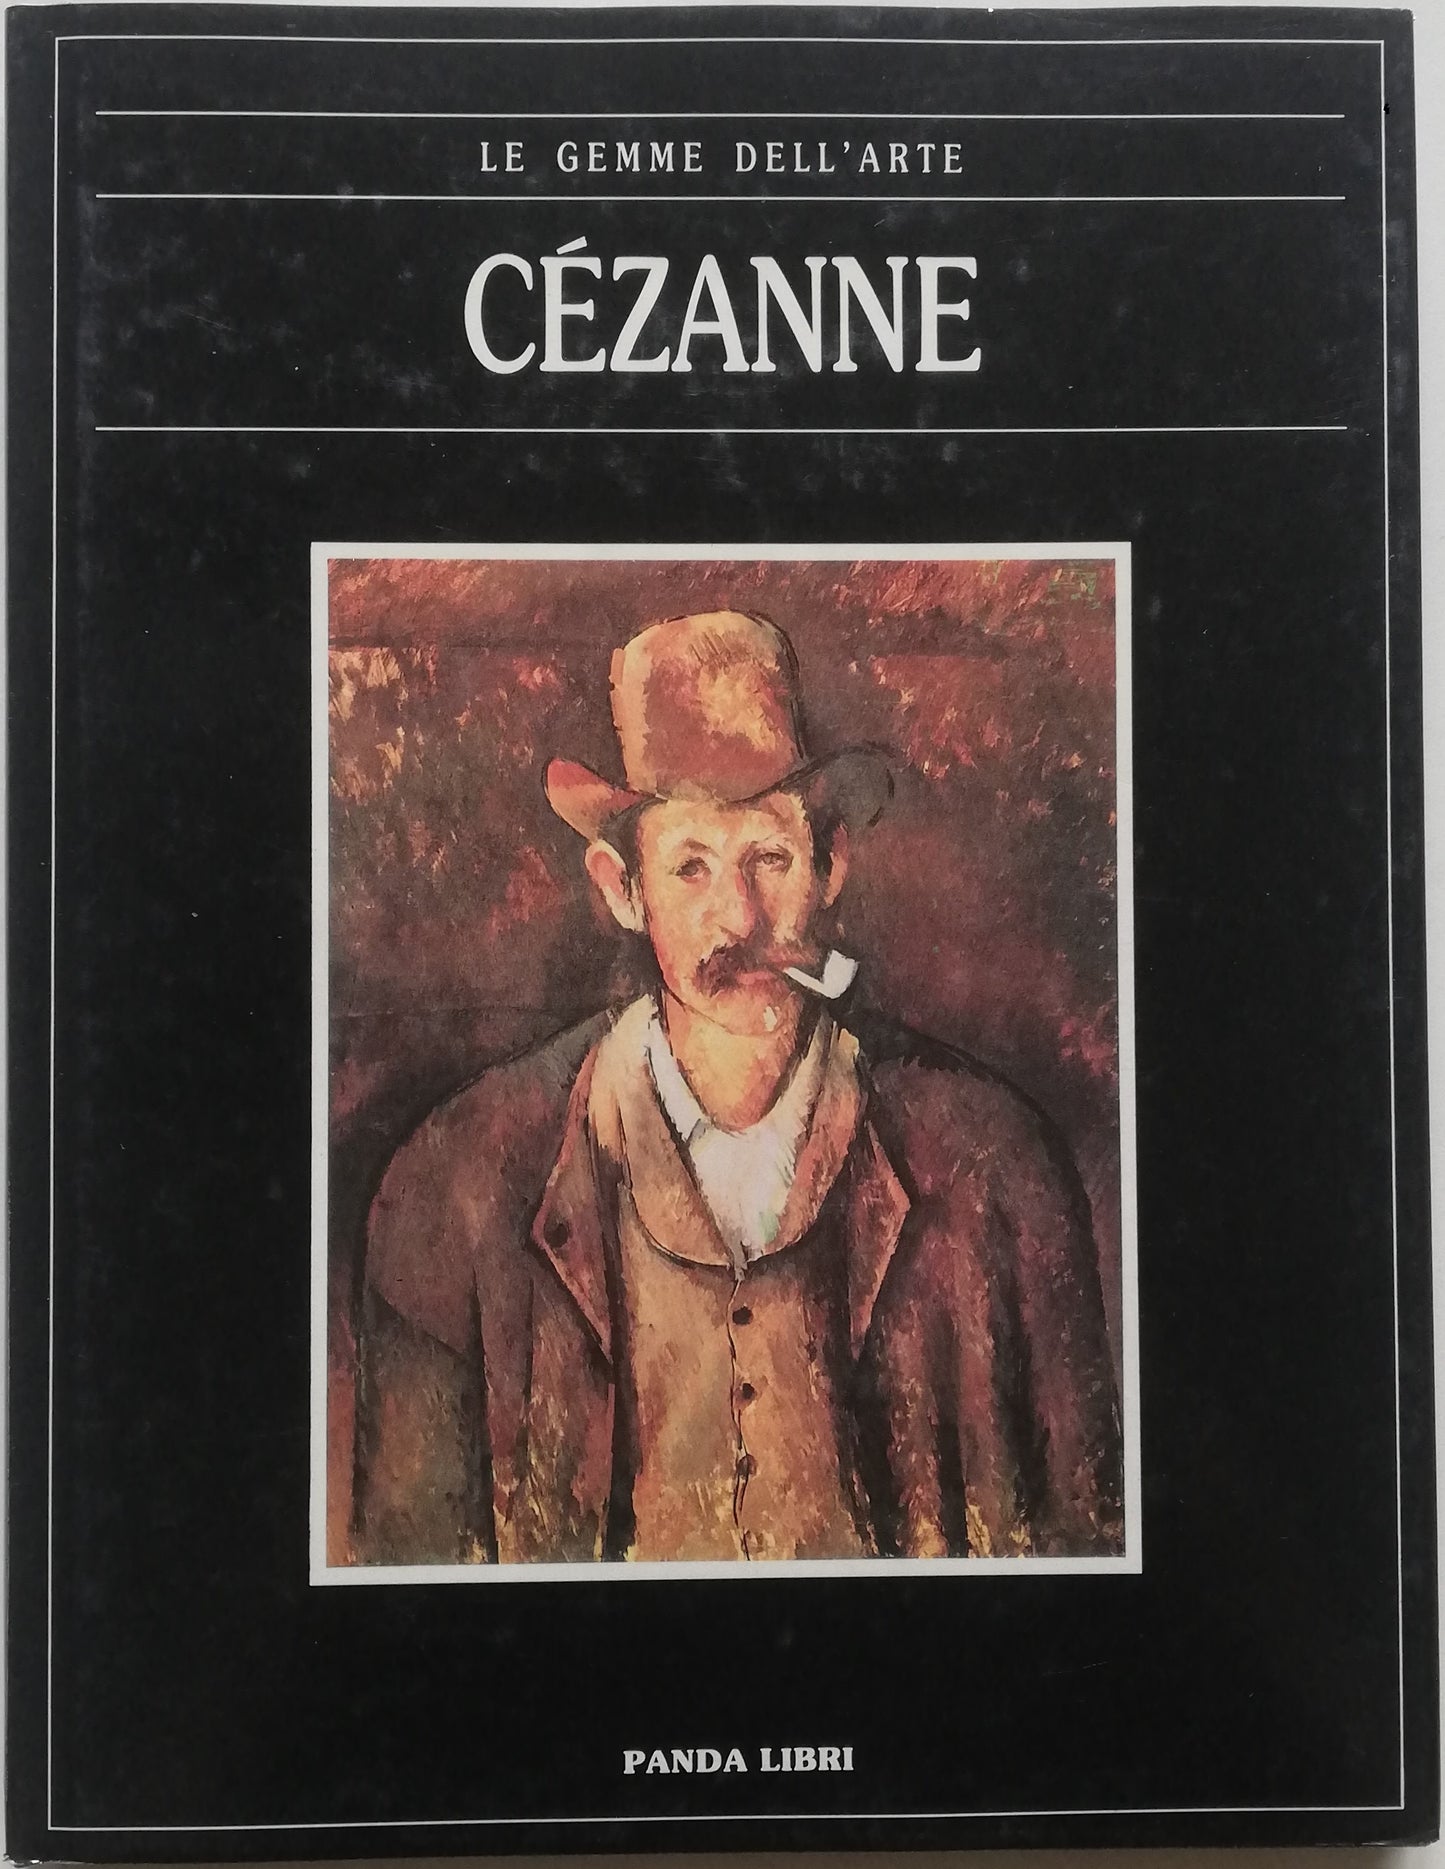 Cezanne - Panda Libri - Le Gemme dell'Arte